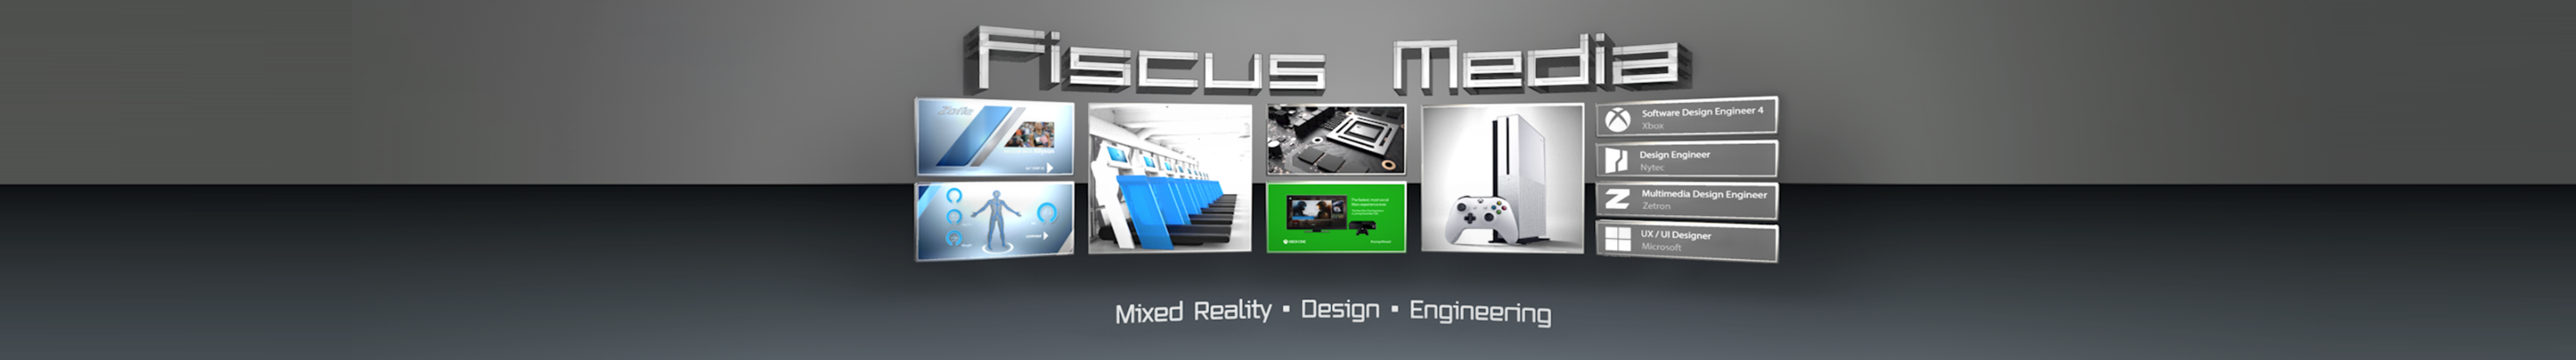 Fiscus Media's profile banner